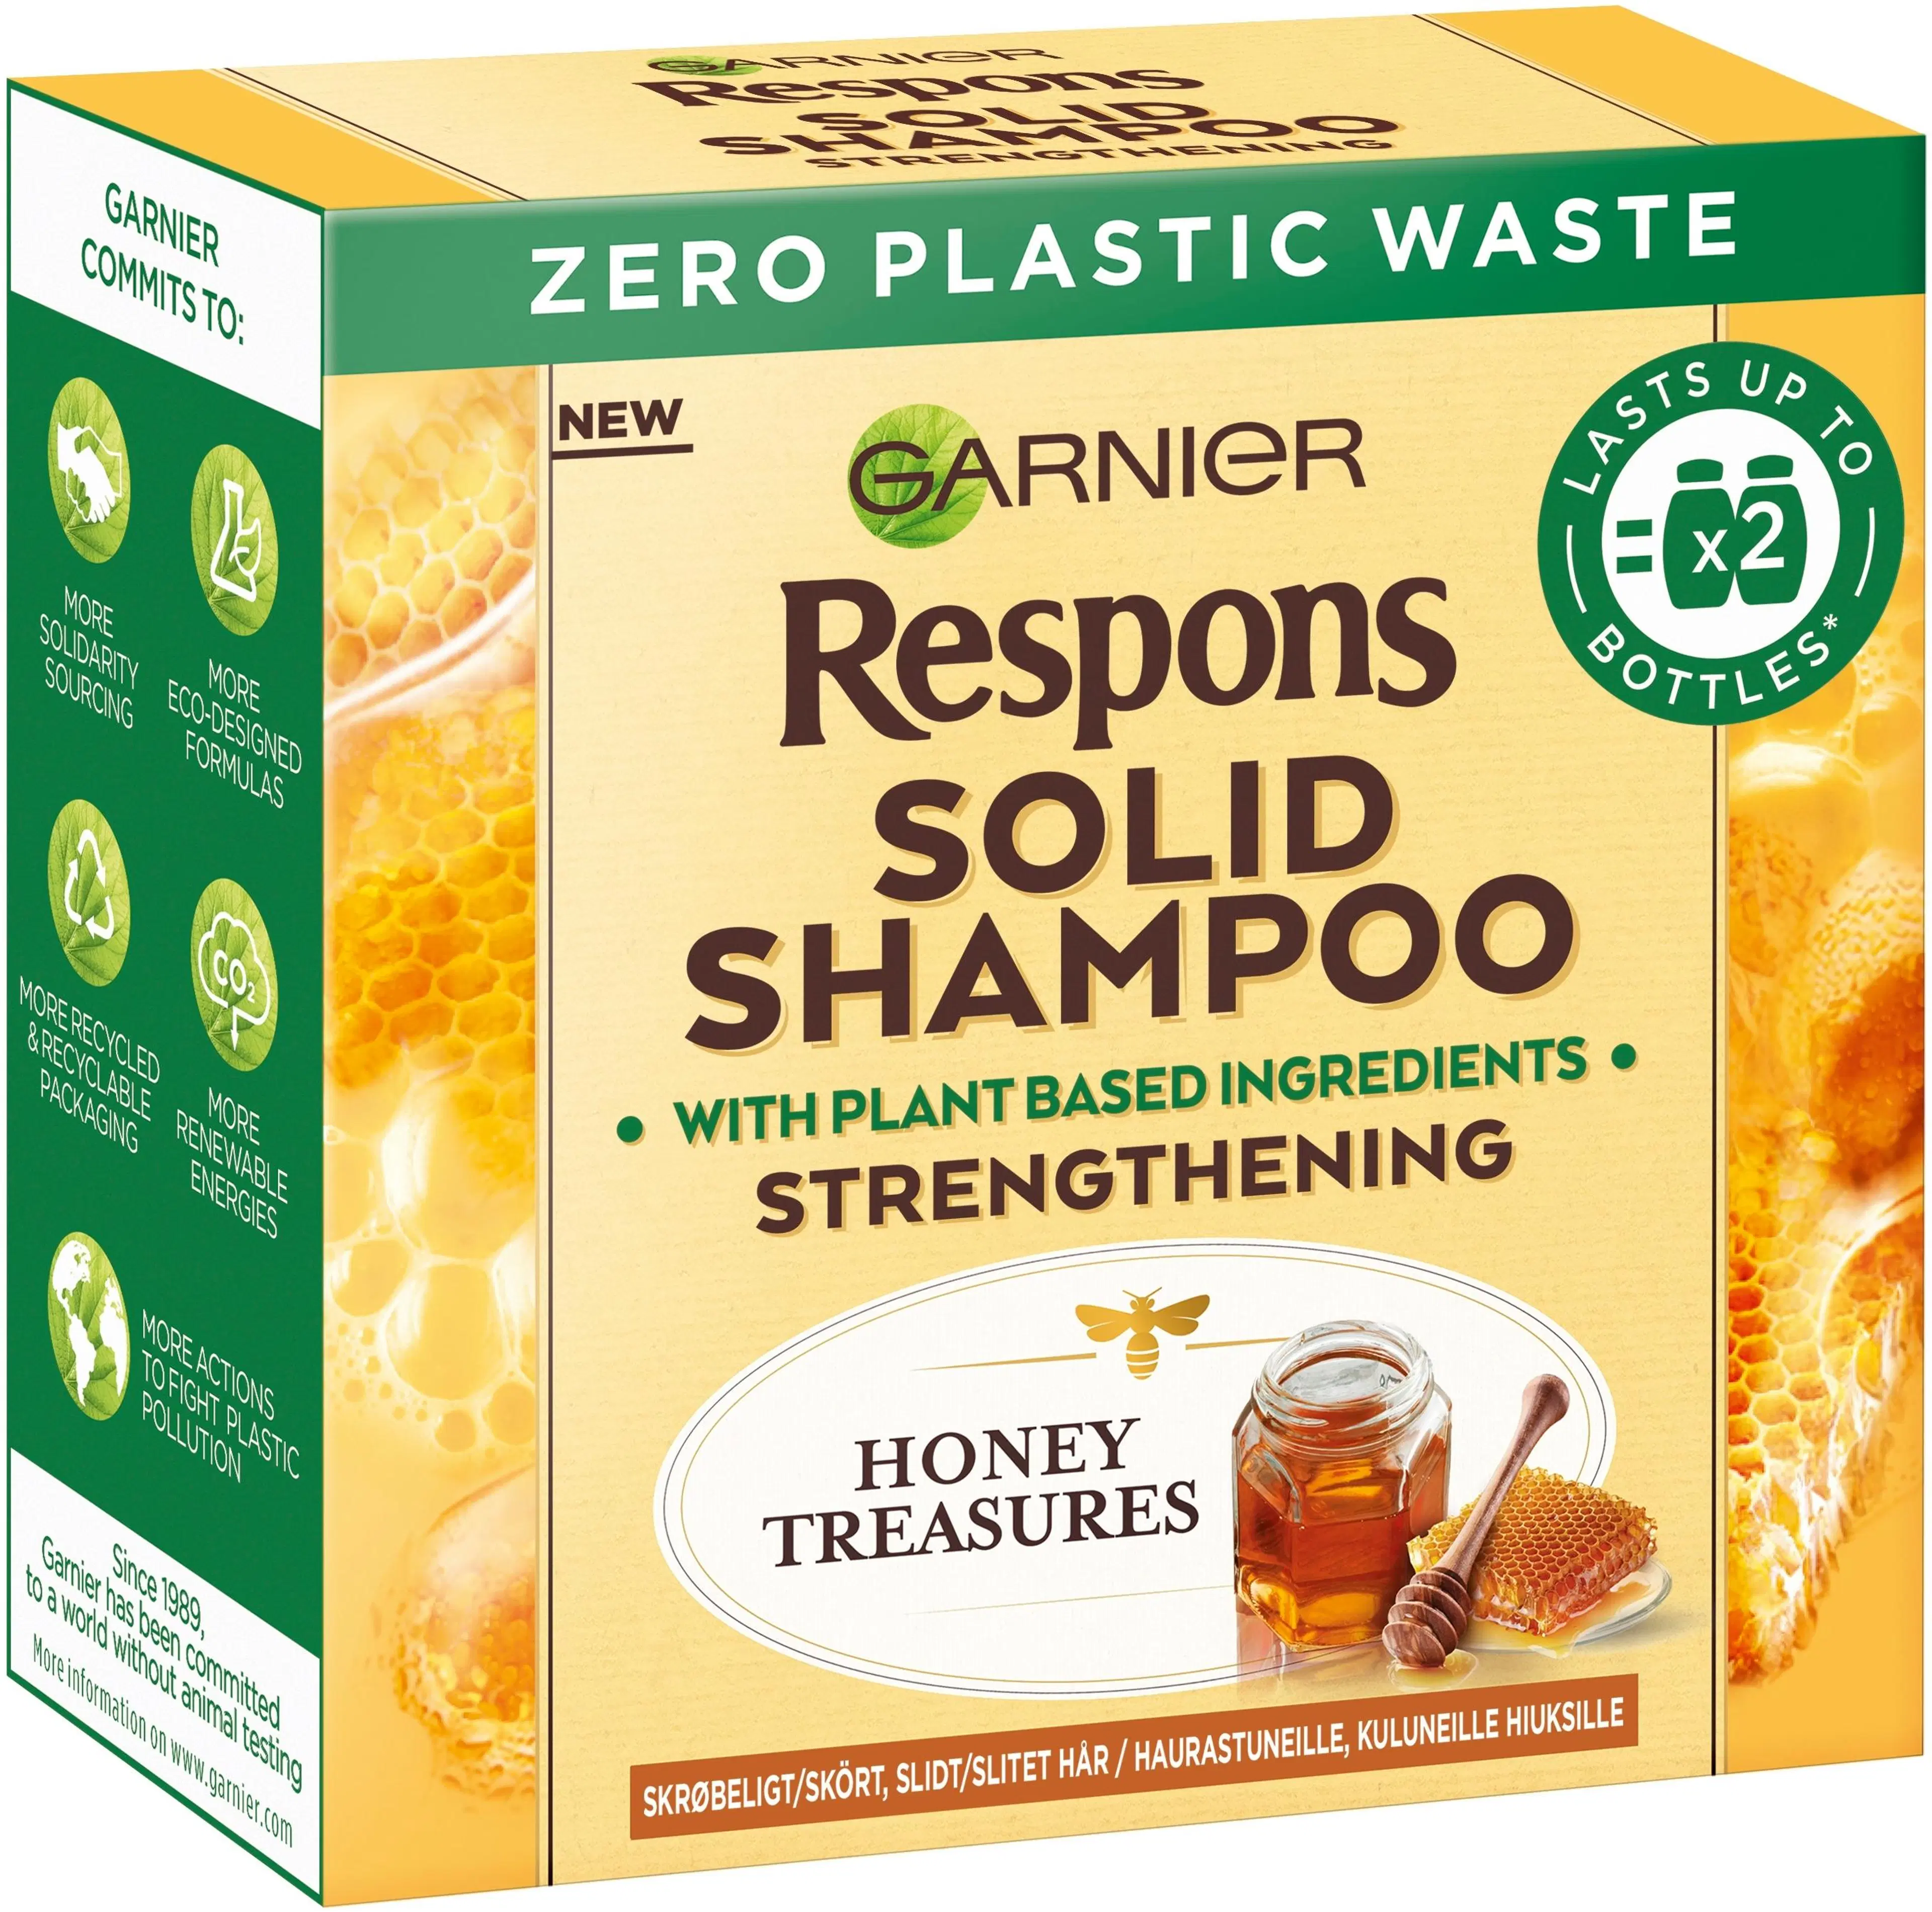 Garnier Respons Honey Treasures Solid Shampoo palashampoo haurastuneille, kuluneille hiuksille  60g